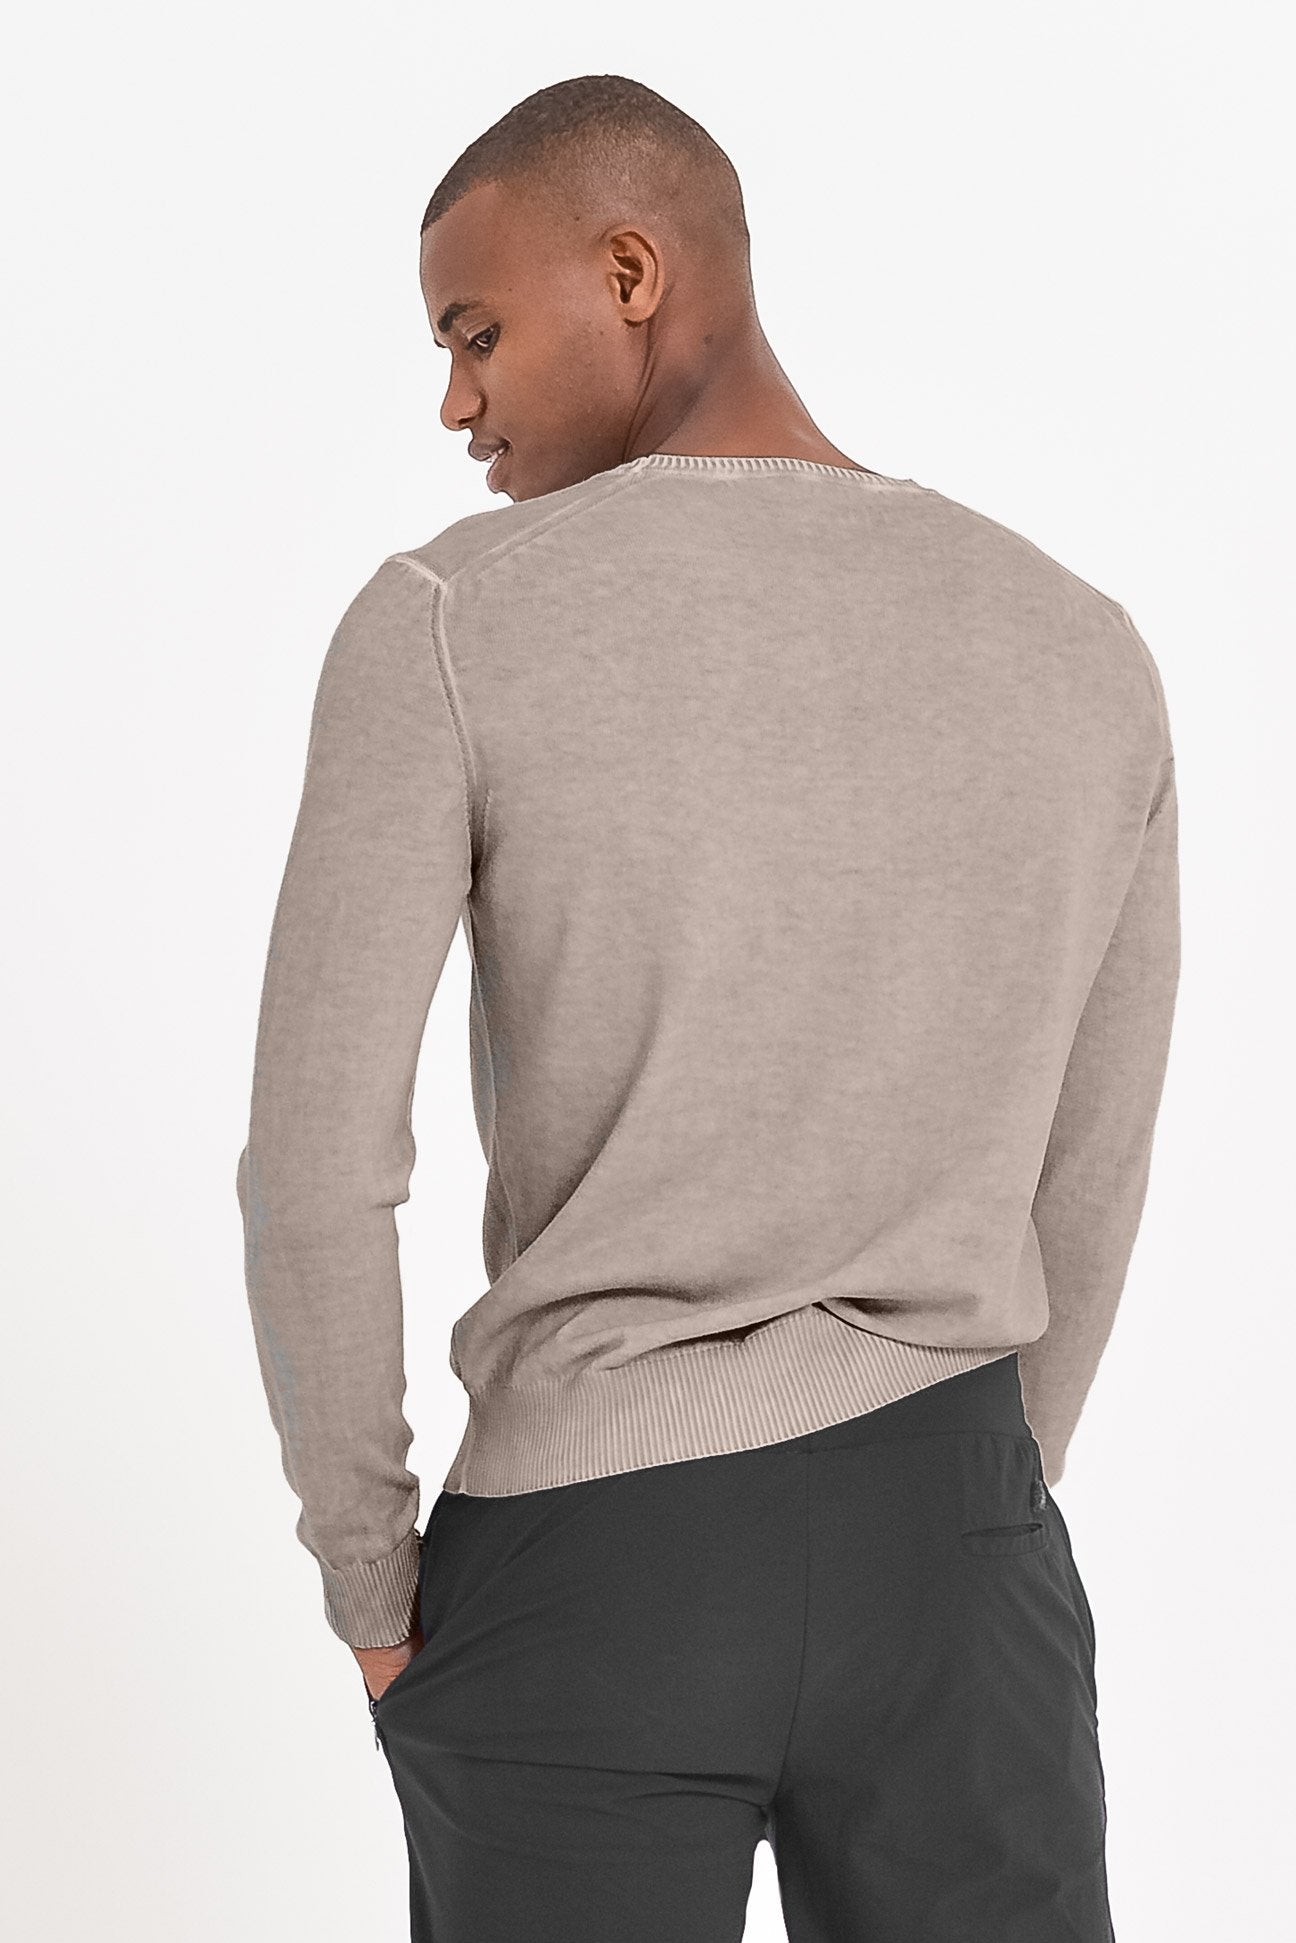 Lightweight Textured Crew Neck Sweater - Corda - Sweaters